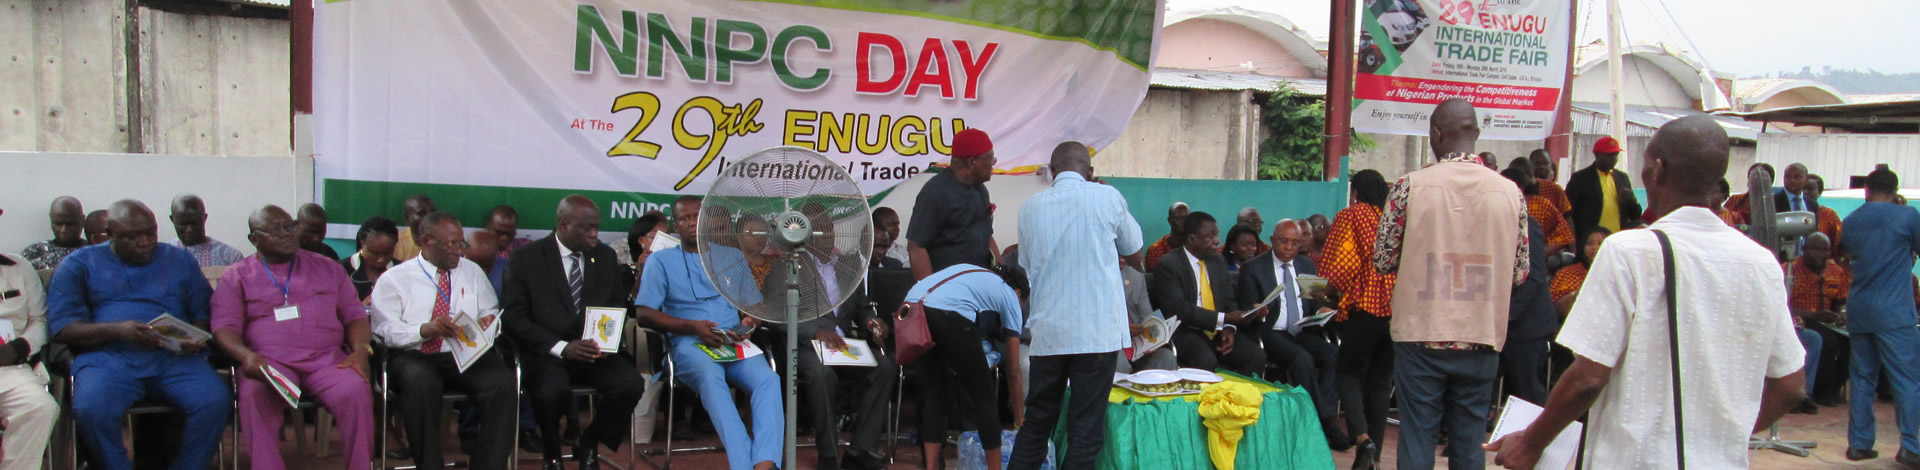 33rd Enugu International Trade Fair